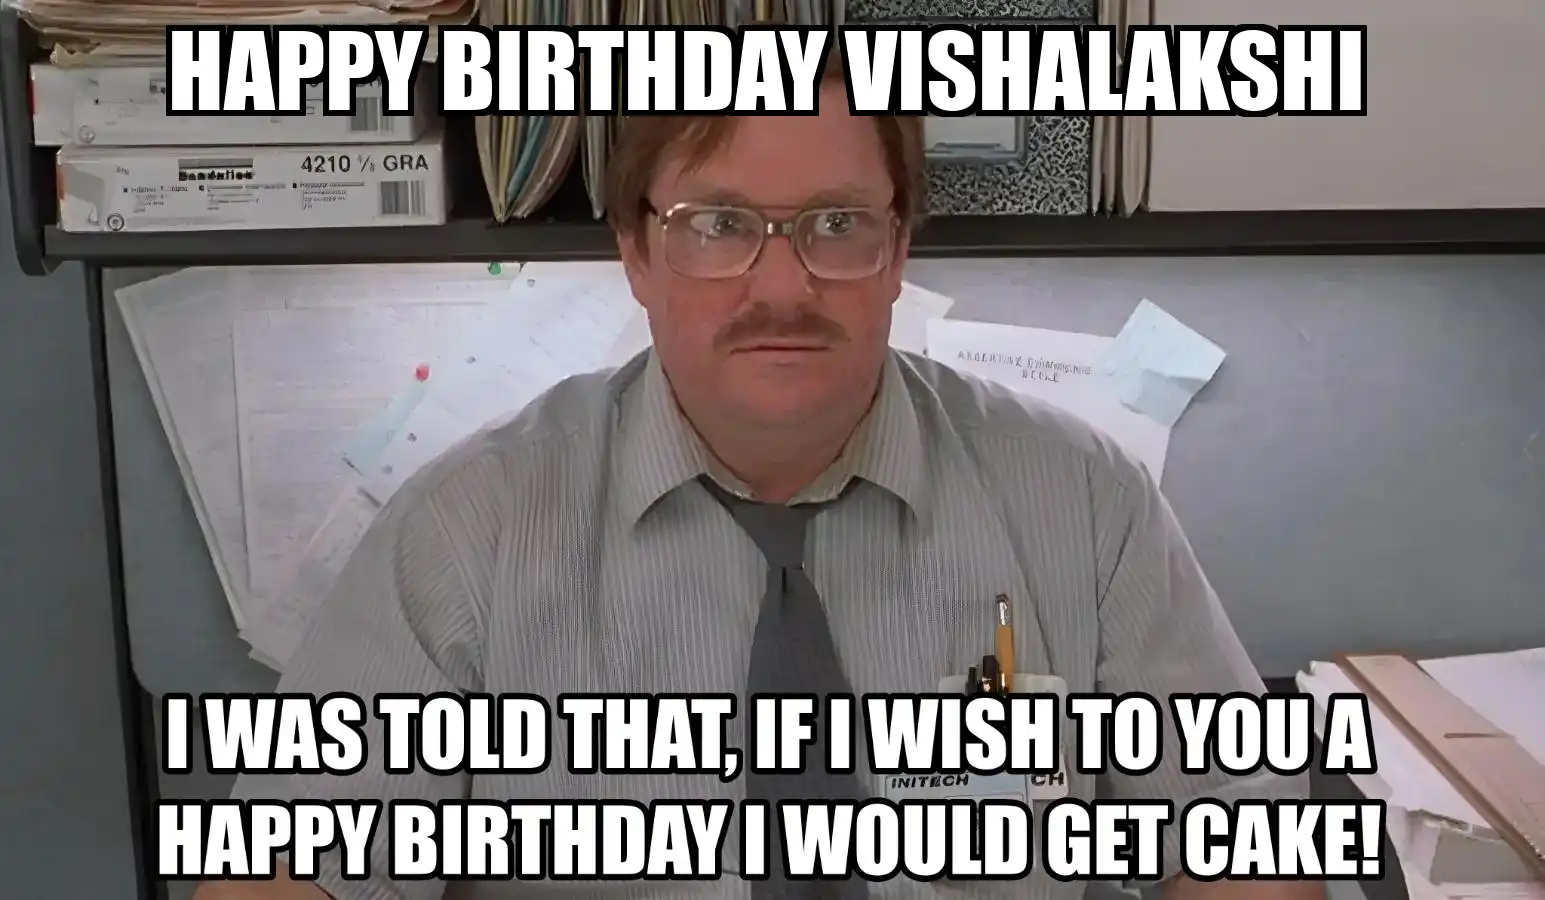 Happy Birthday Vishalakshi I Would Get A Cake Meme